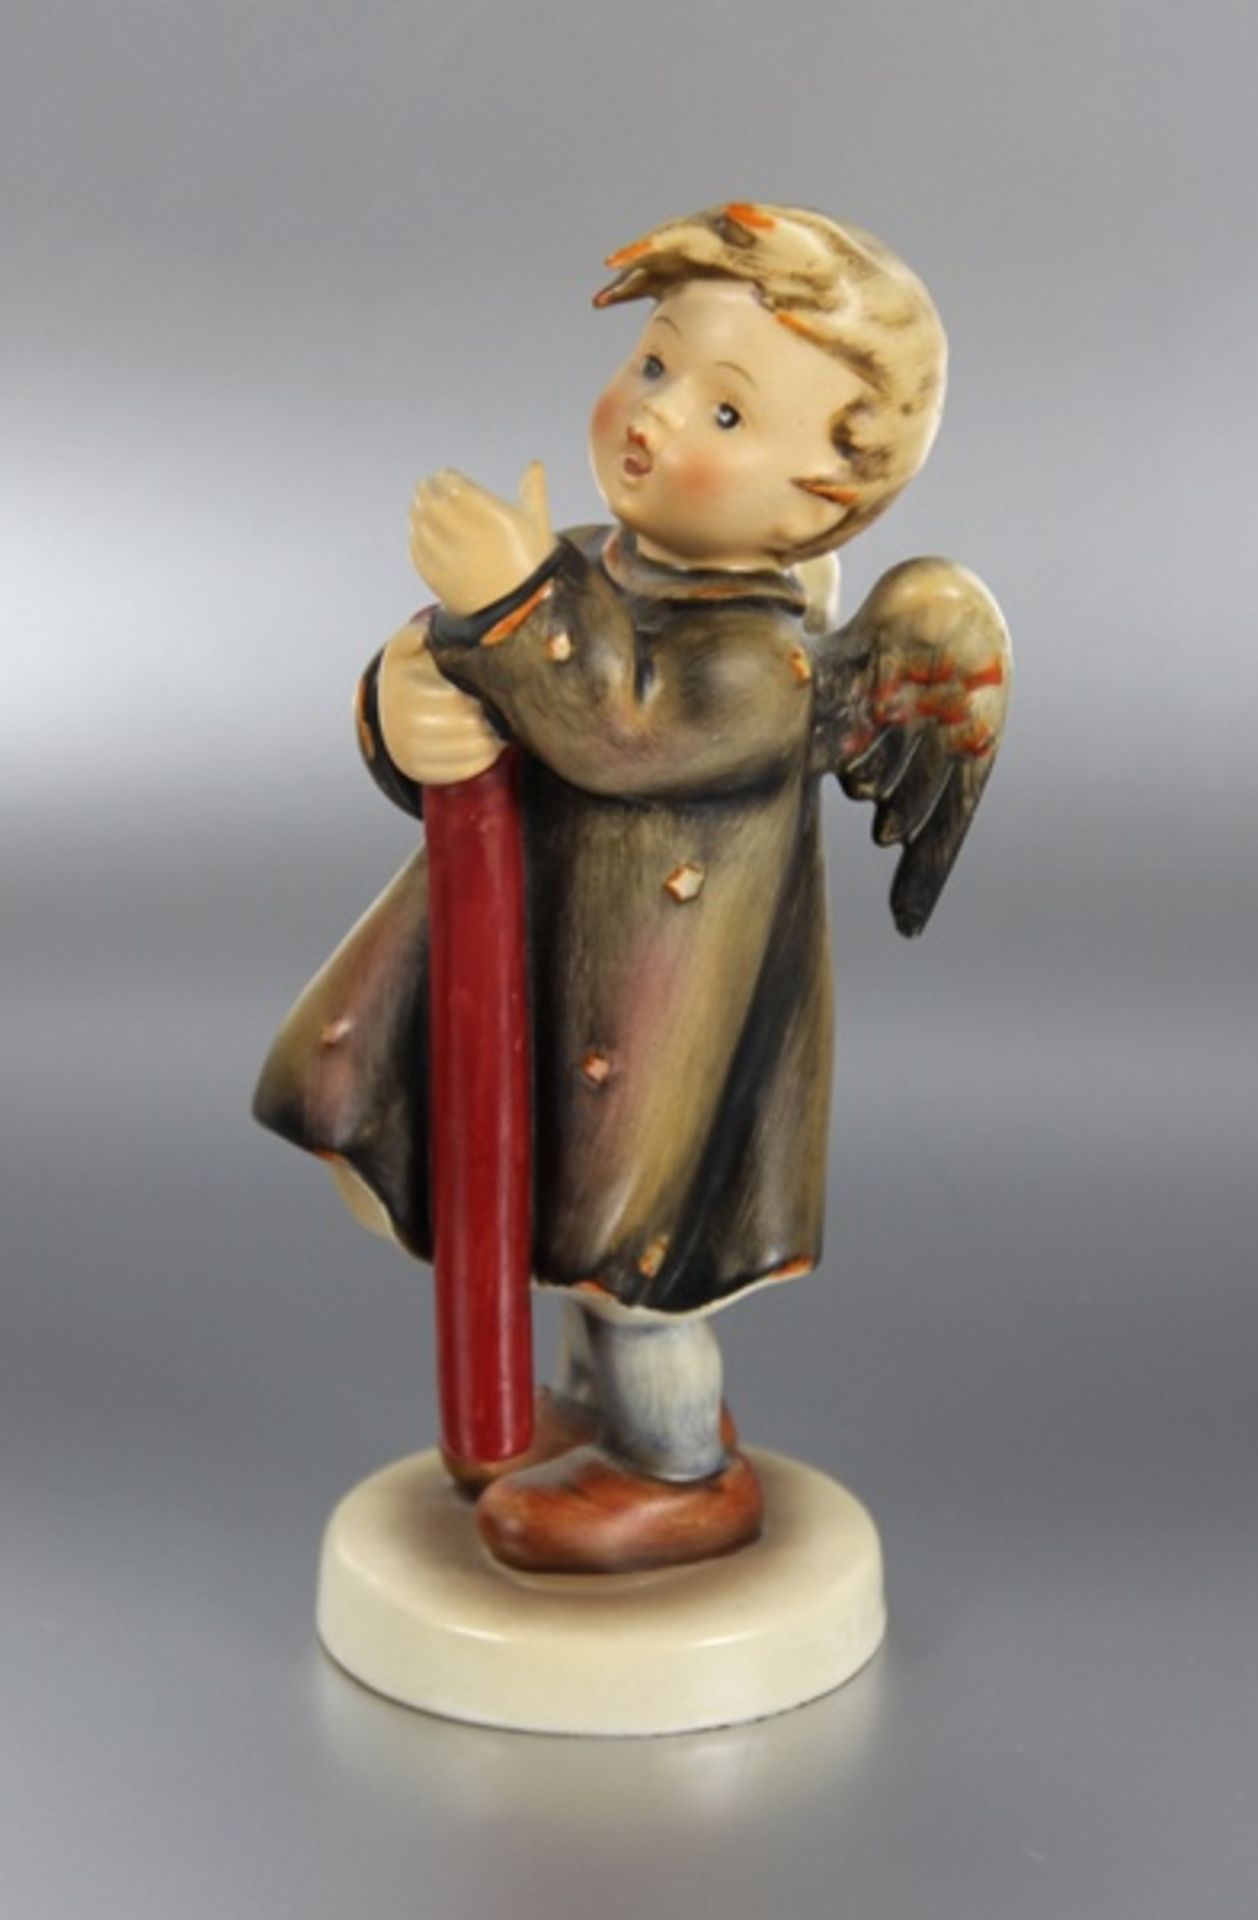 Hummel-Figur Kerzenengel1940er/50er Jahre, Goebel Hummel Kerzenengel, gemarkt u.A. mit W. Goebel,